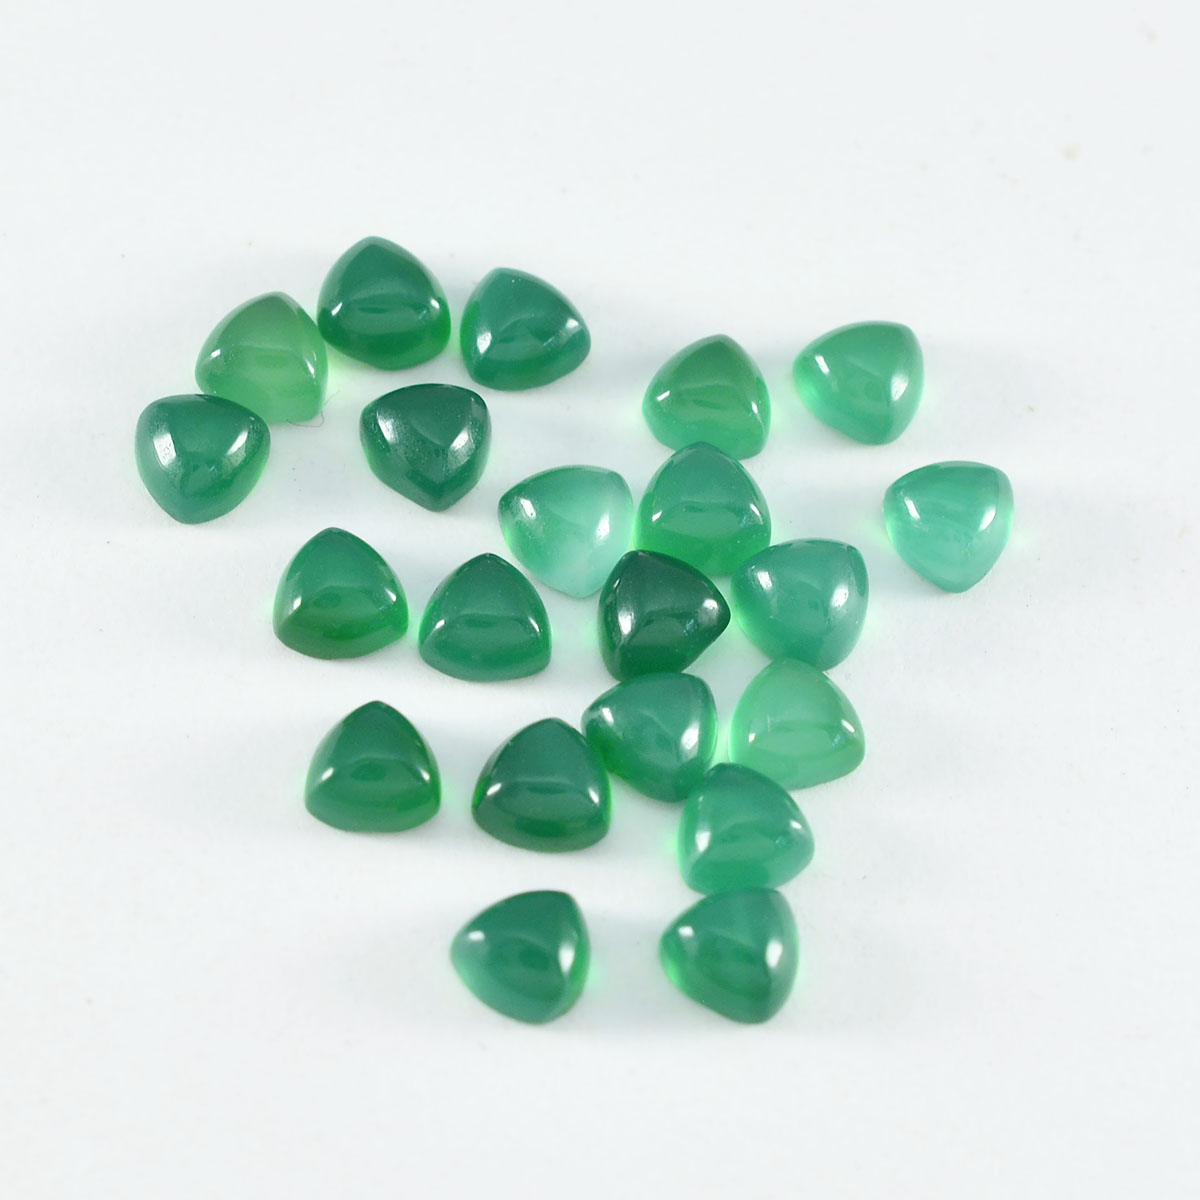 Riyogems 1PC Green Onyx Cabochon 4x4 mm Trillion Shape astonishing Quality Loose Gemstone